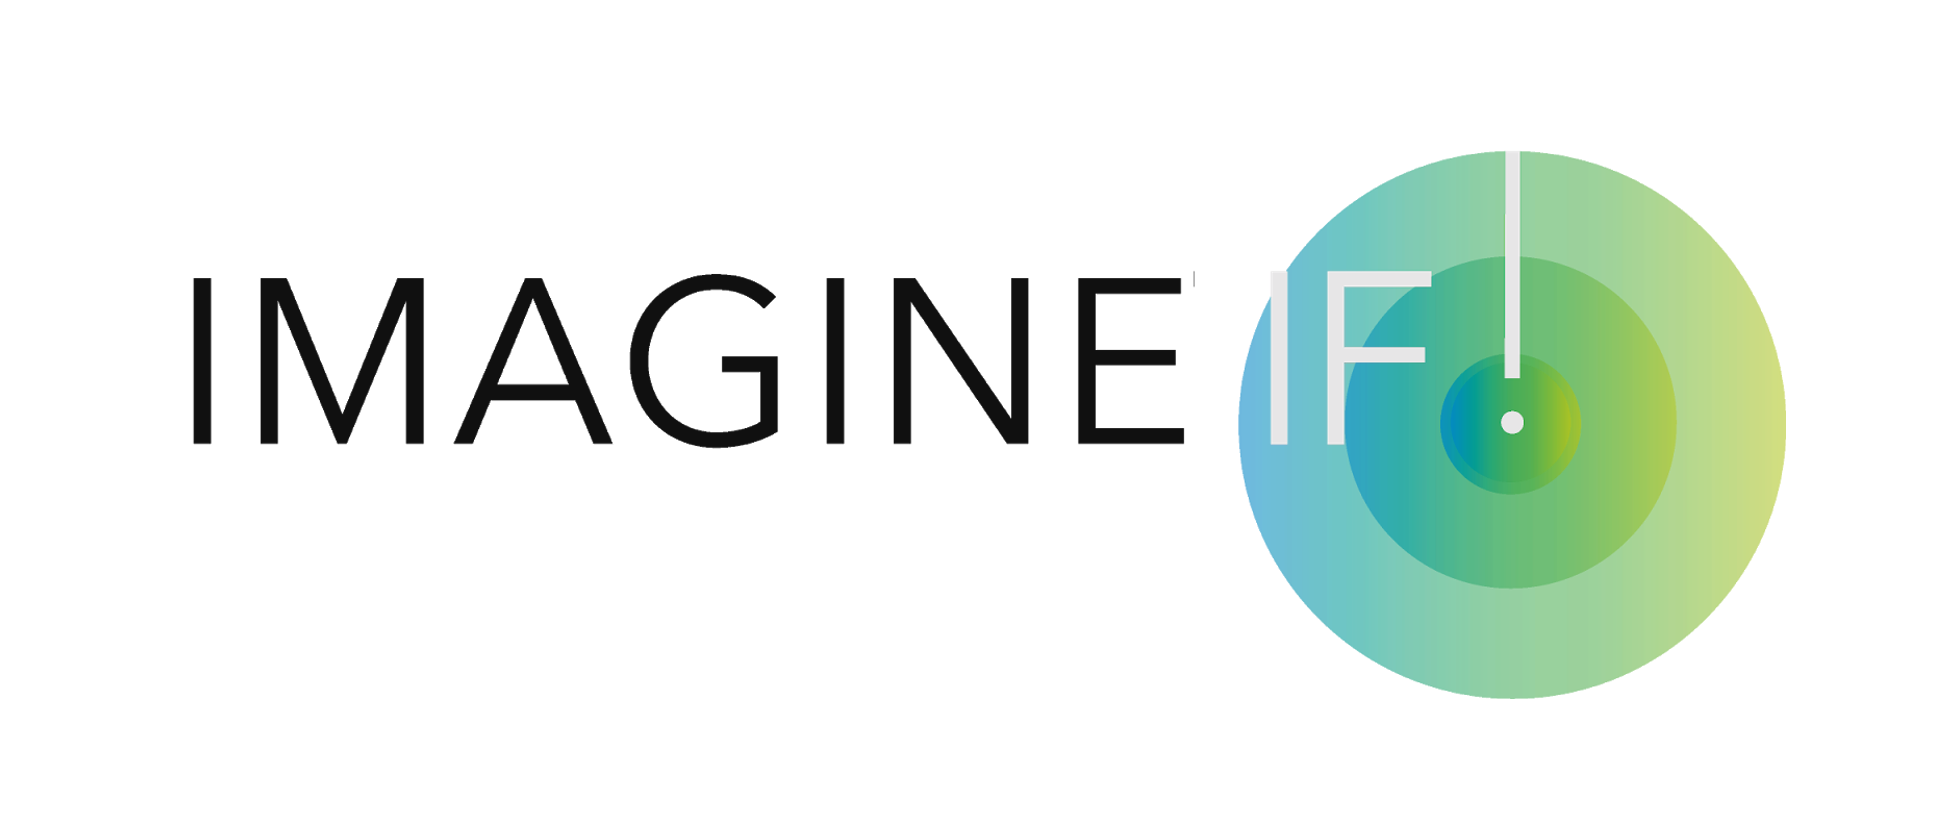 Imagine e. Imagine(). Imagine making логотип. Imagine Lab фото логотипа. Логотип event Technology.